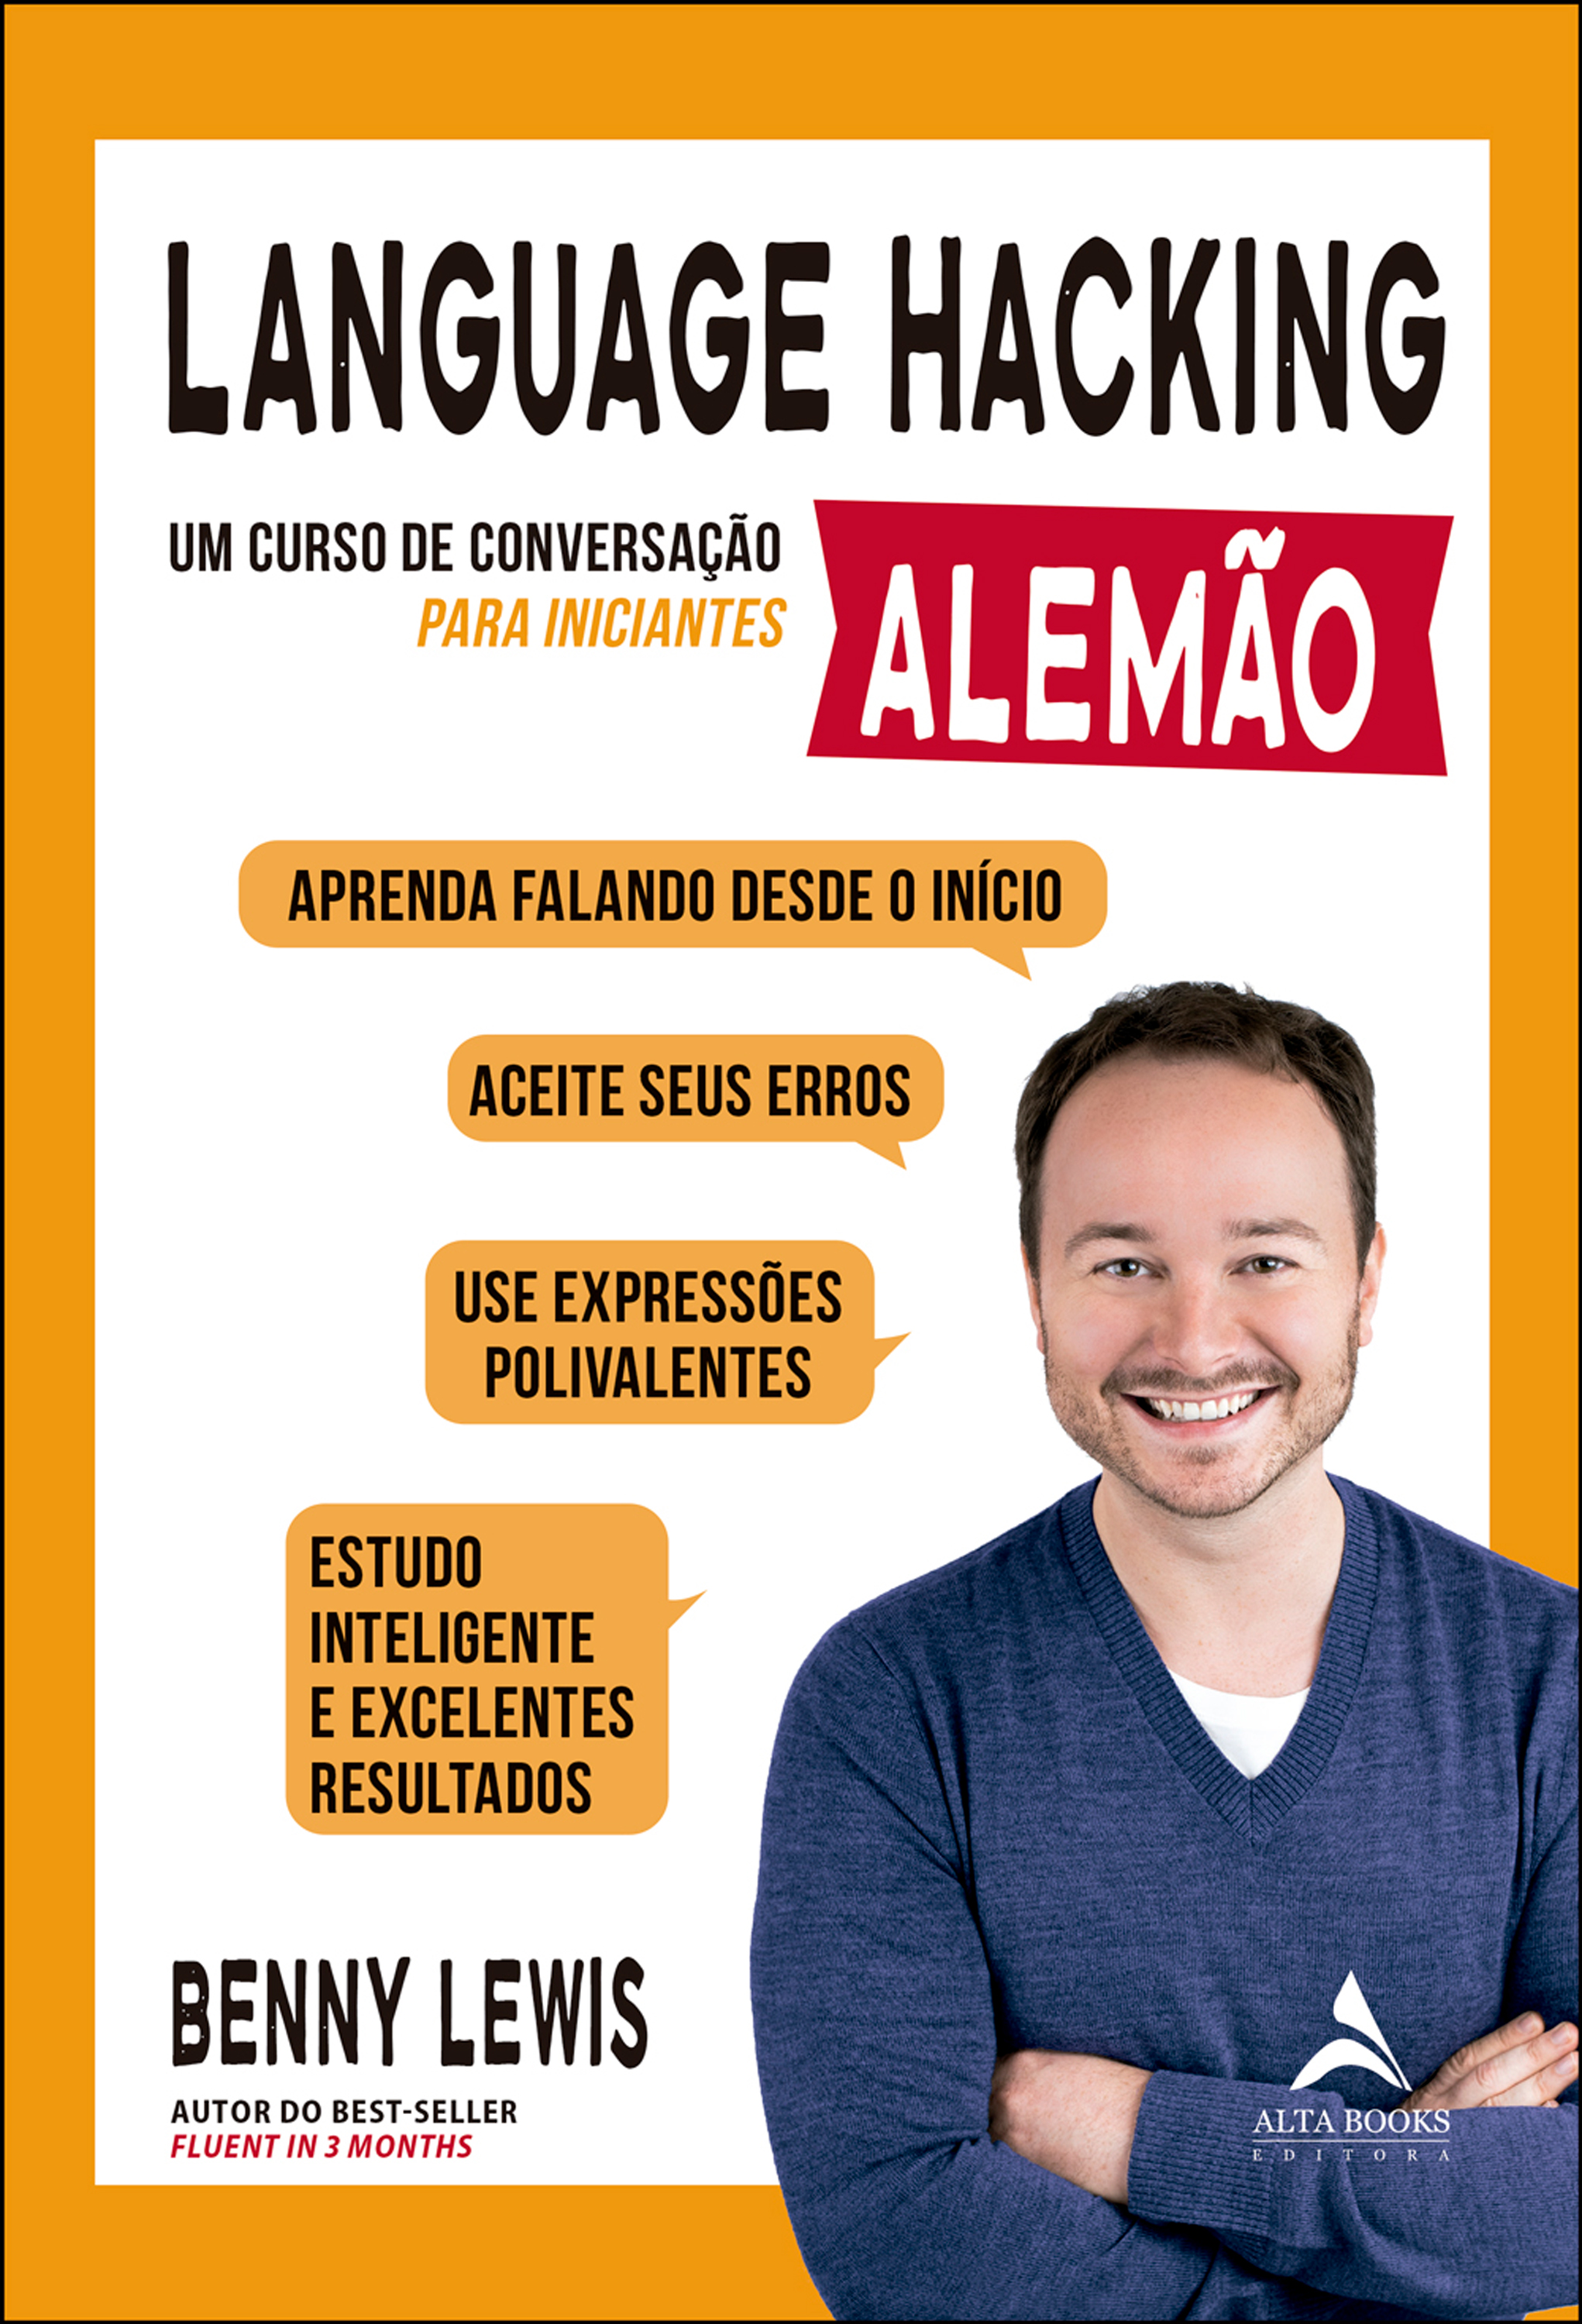 Language hacking - Alemão